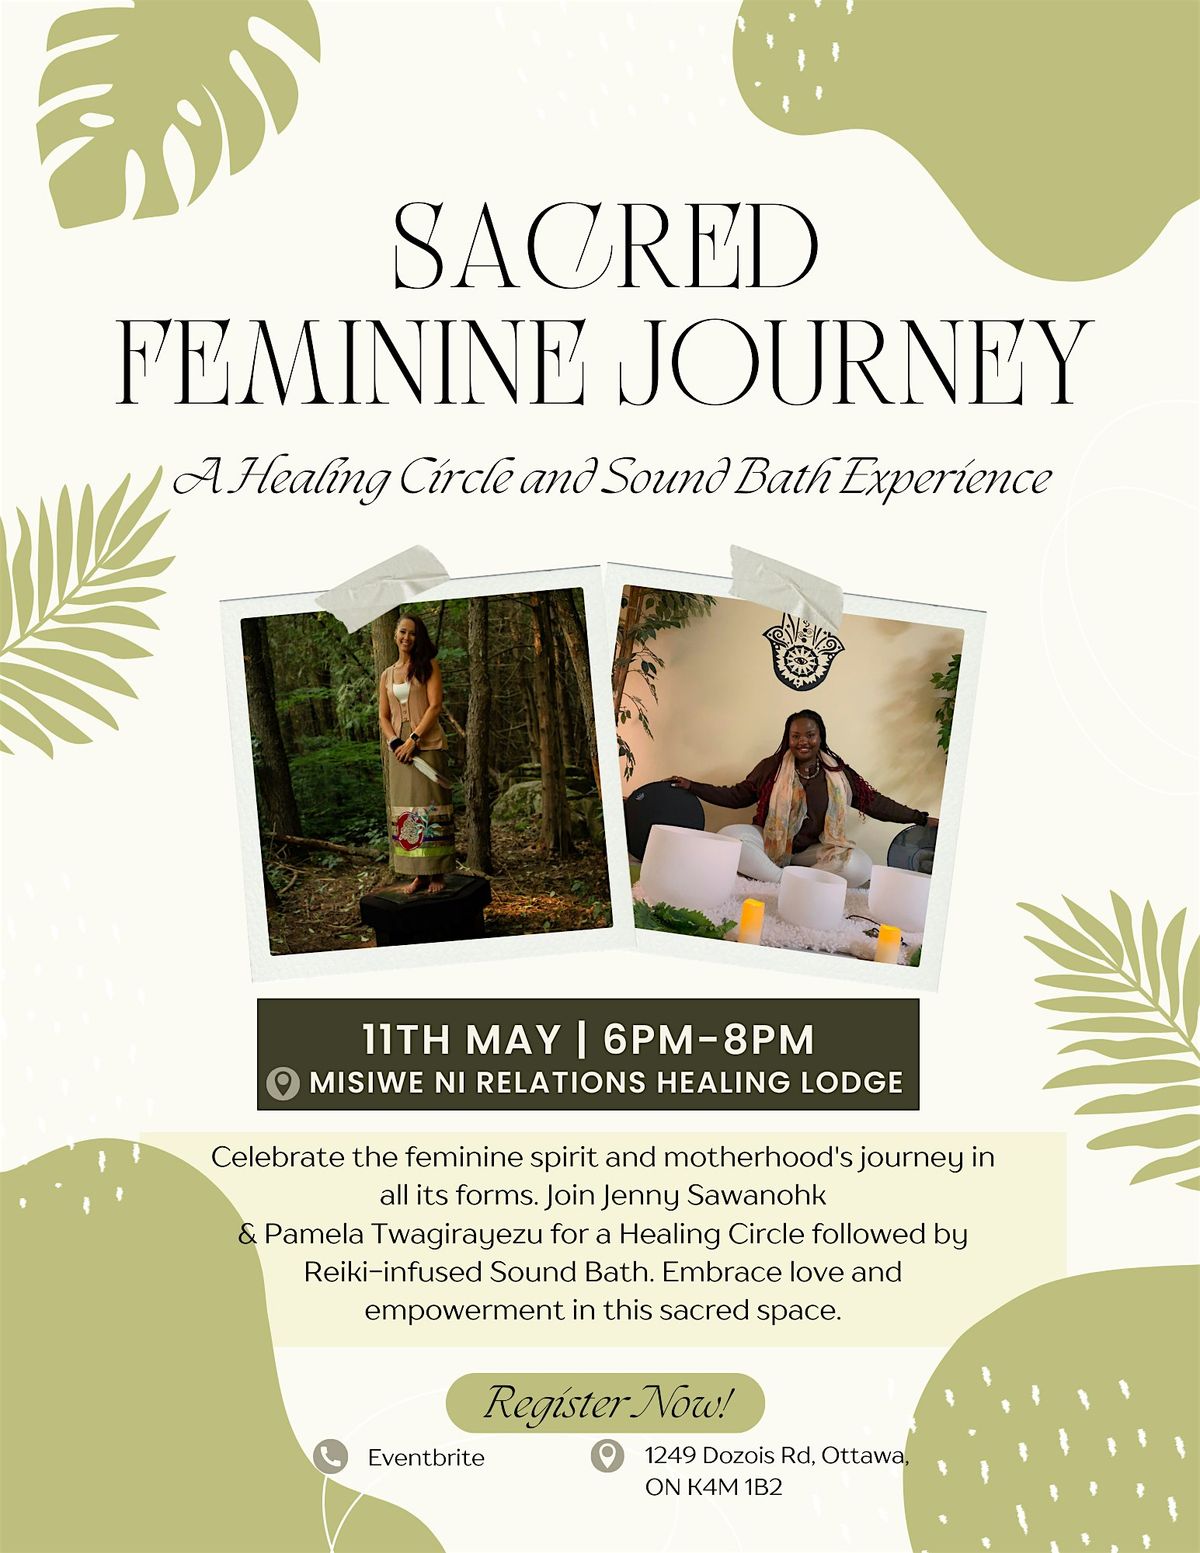 Sacred Feminine Journey: A Healing Circle and Sound Bath